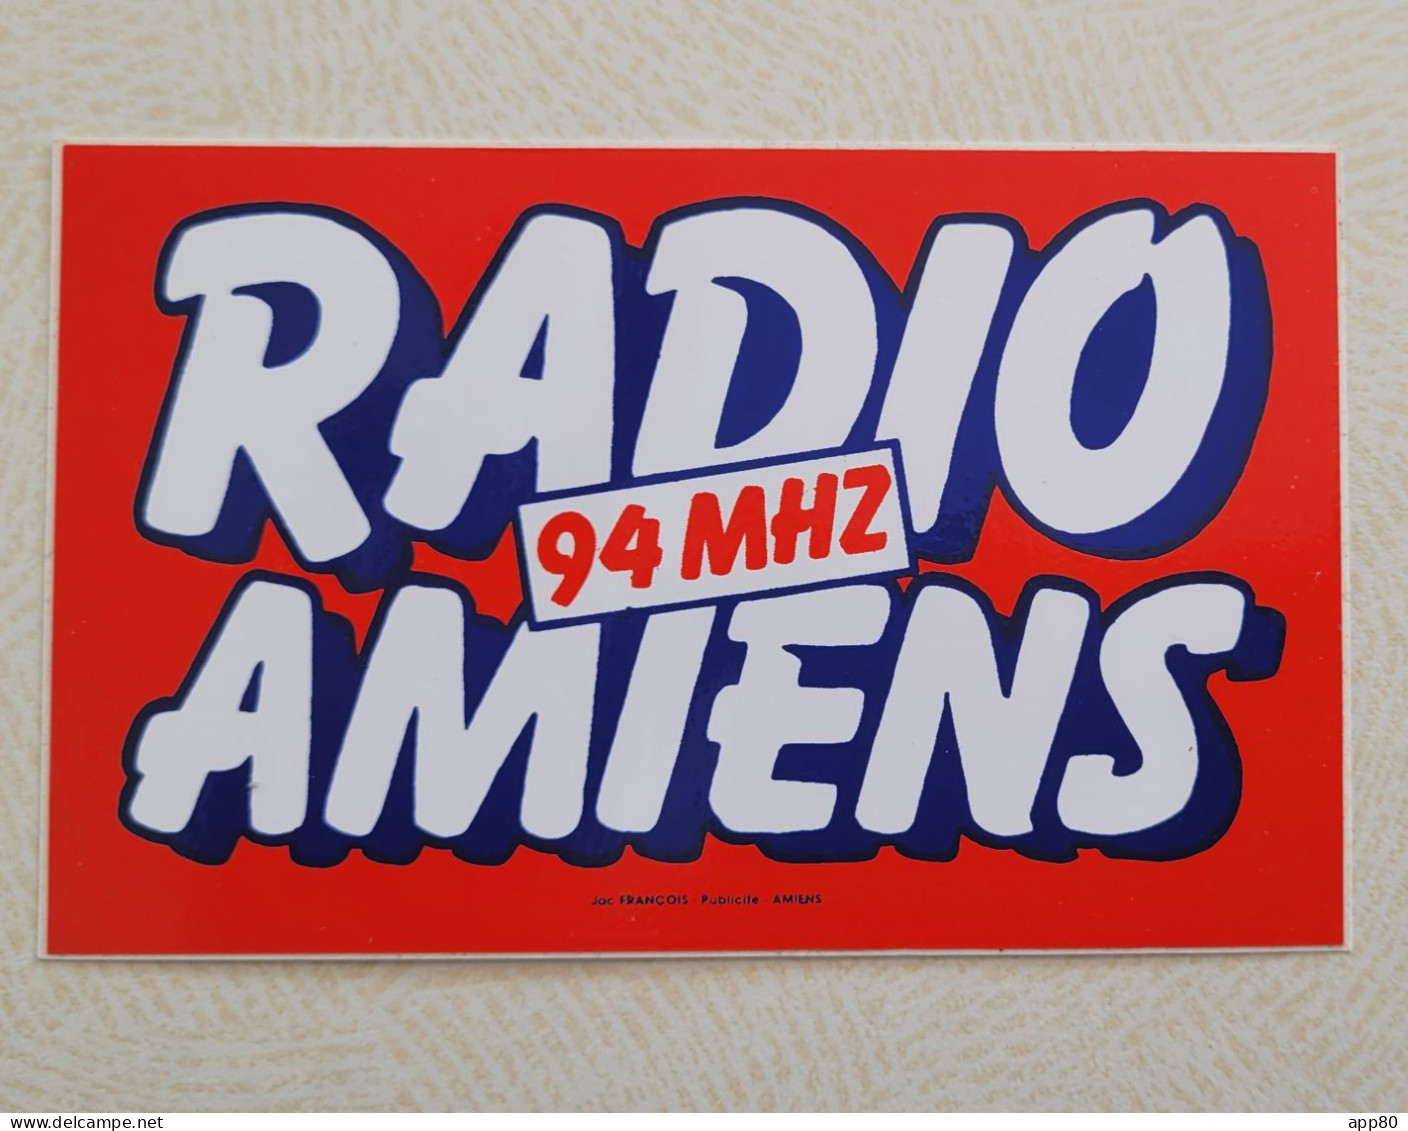 Autocollant Vintage Radio Amiens - Aufkleber